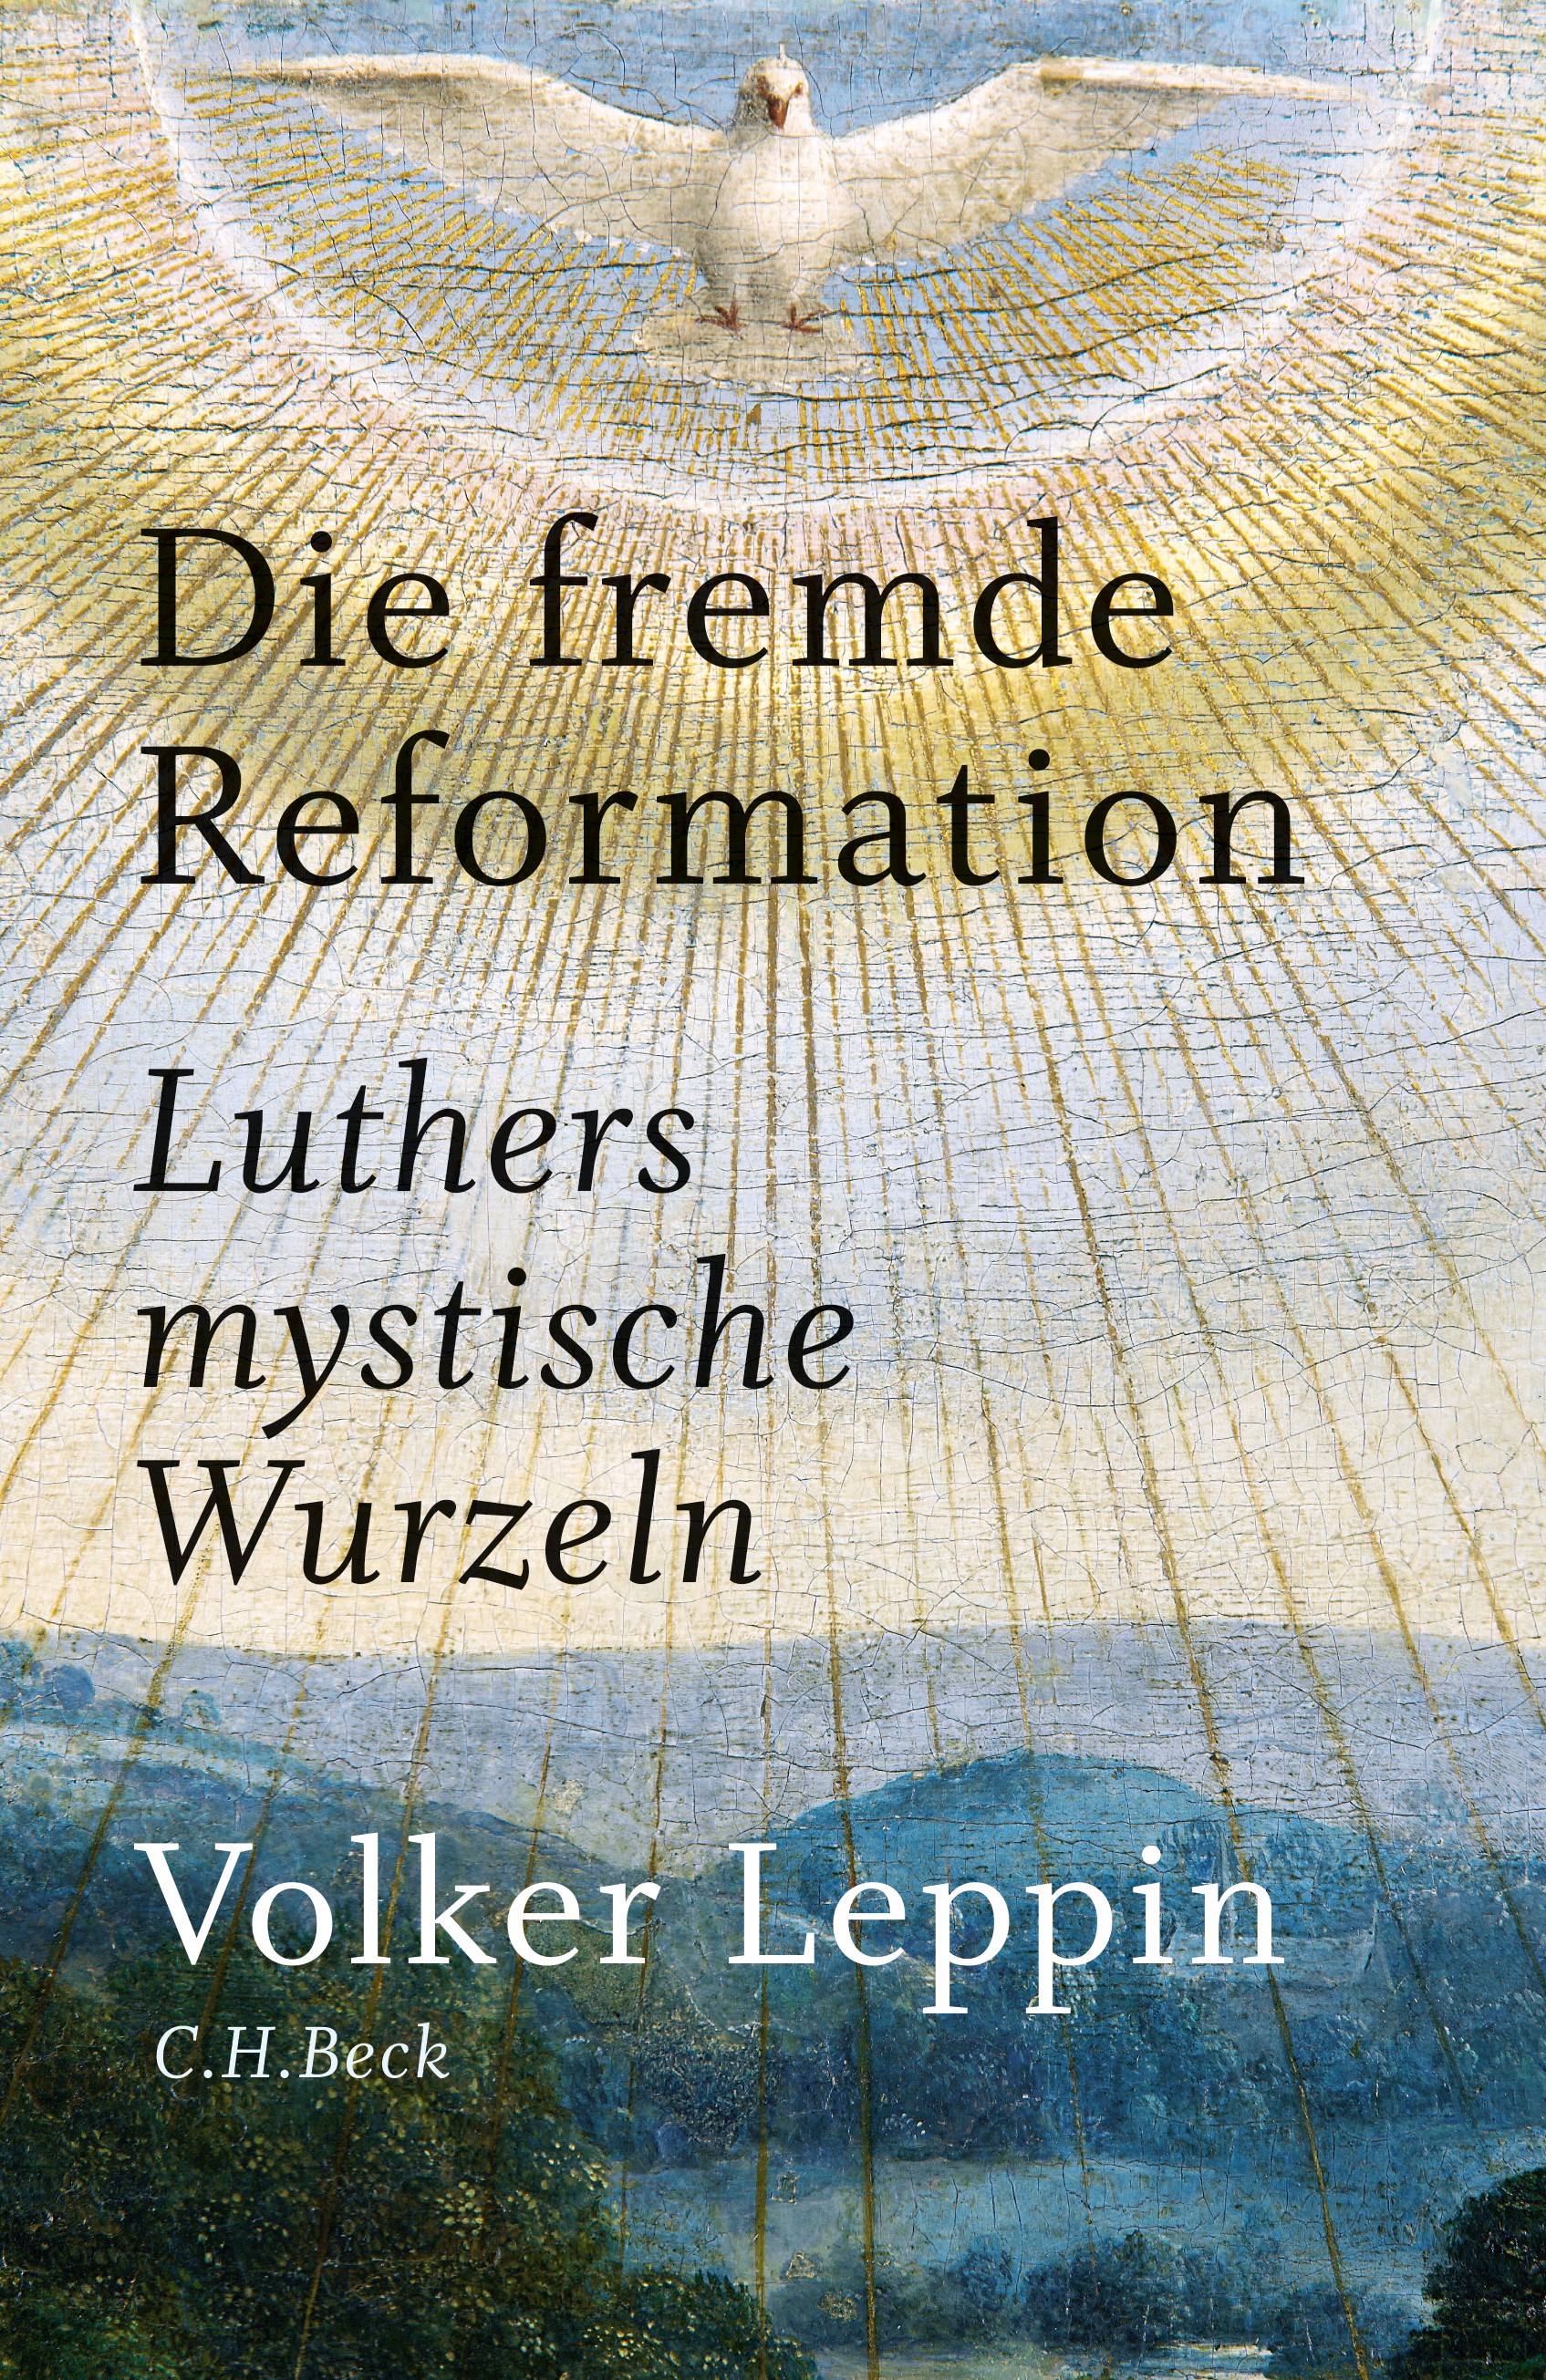 Cover: Leppin, Volker, Die fremde Reformation